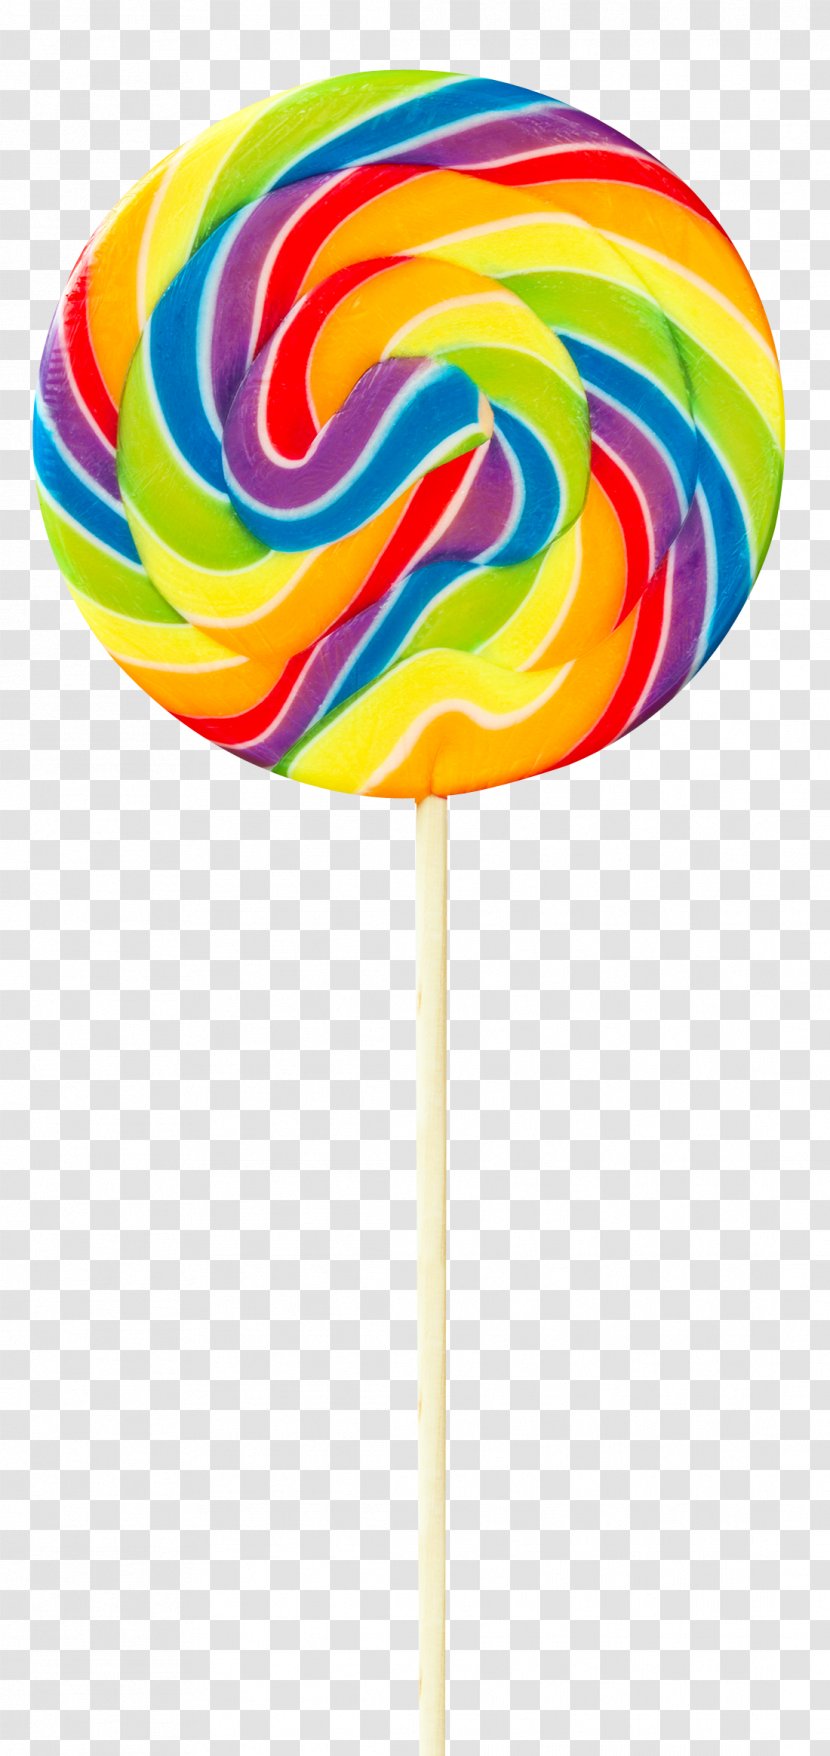 Candy Lollipop Stick Gummi Ice Cream Transparent PNG